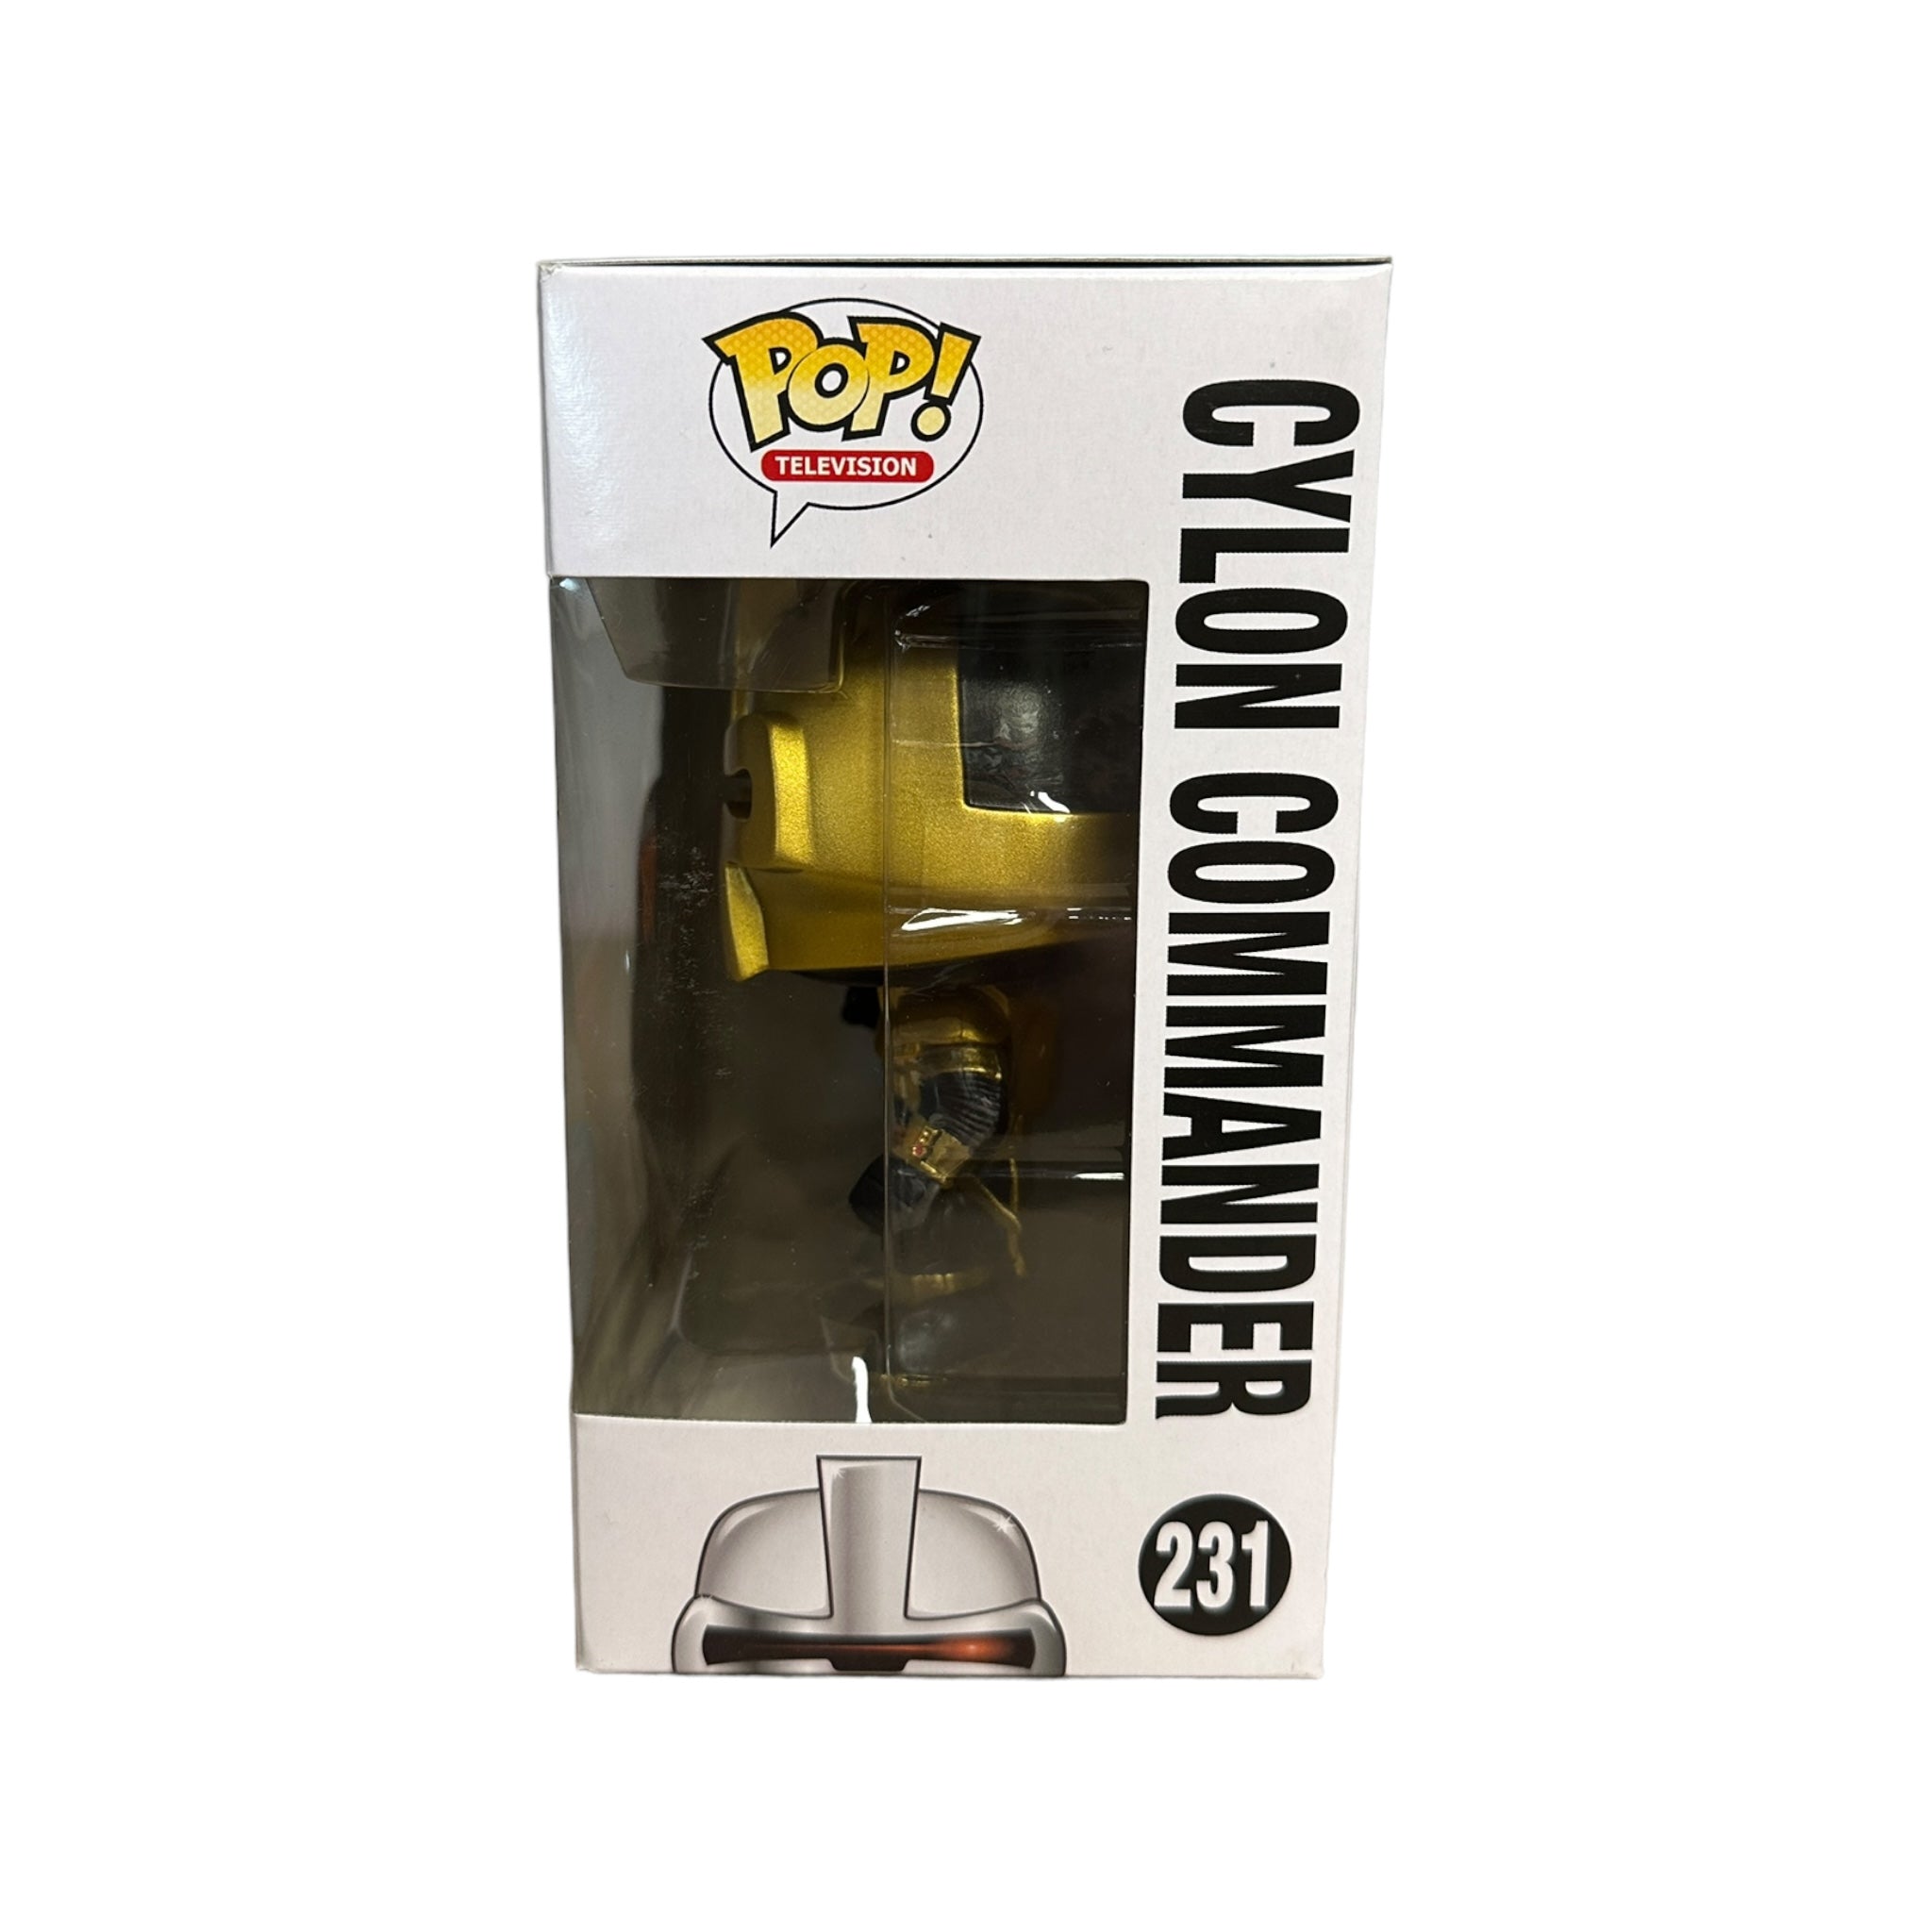 Cylon Commander #231 (Gold) Funko Pop! - Battlestar Galactica - NYCC 2015 Exclusive LE1000 Pcs - Condition 8.25/10